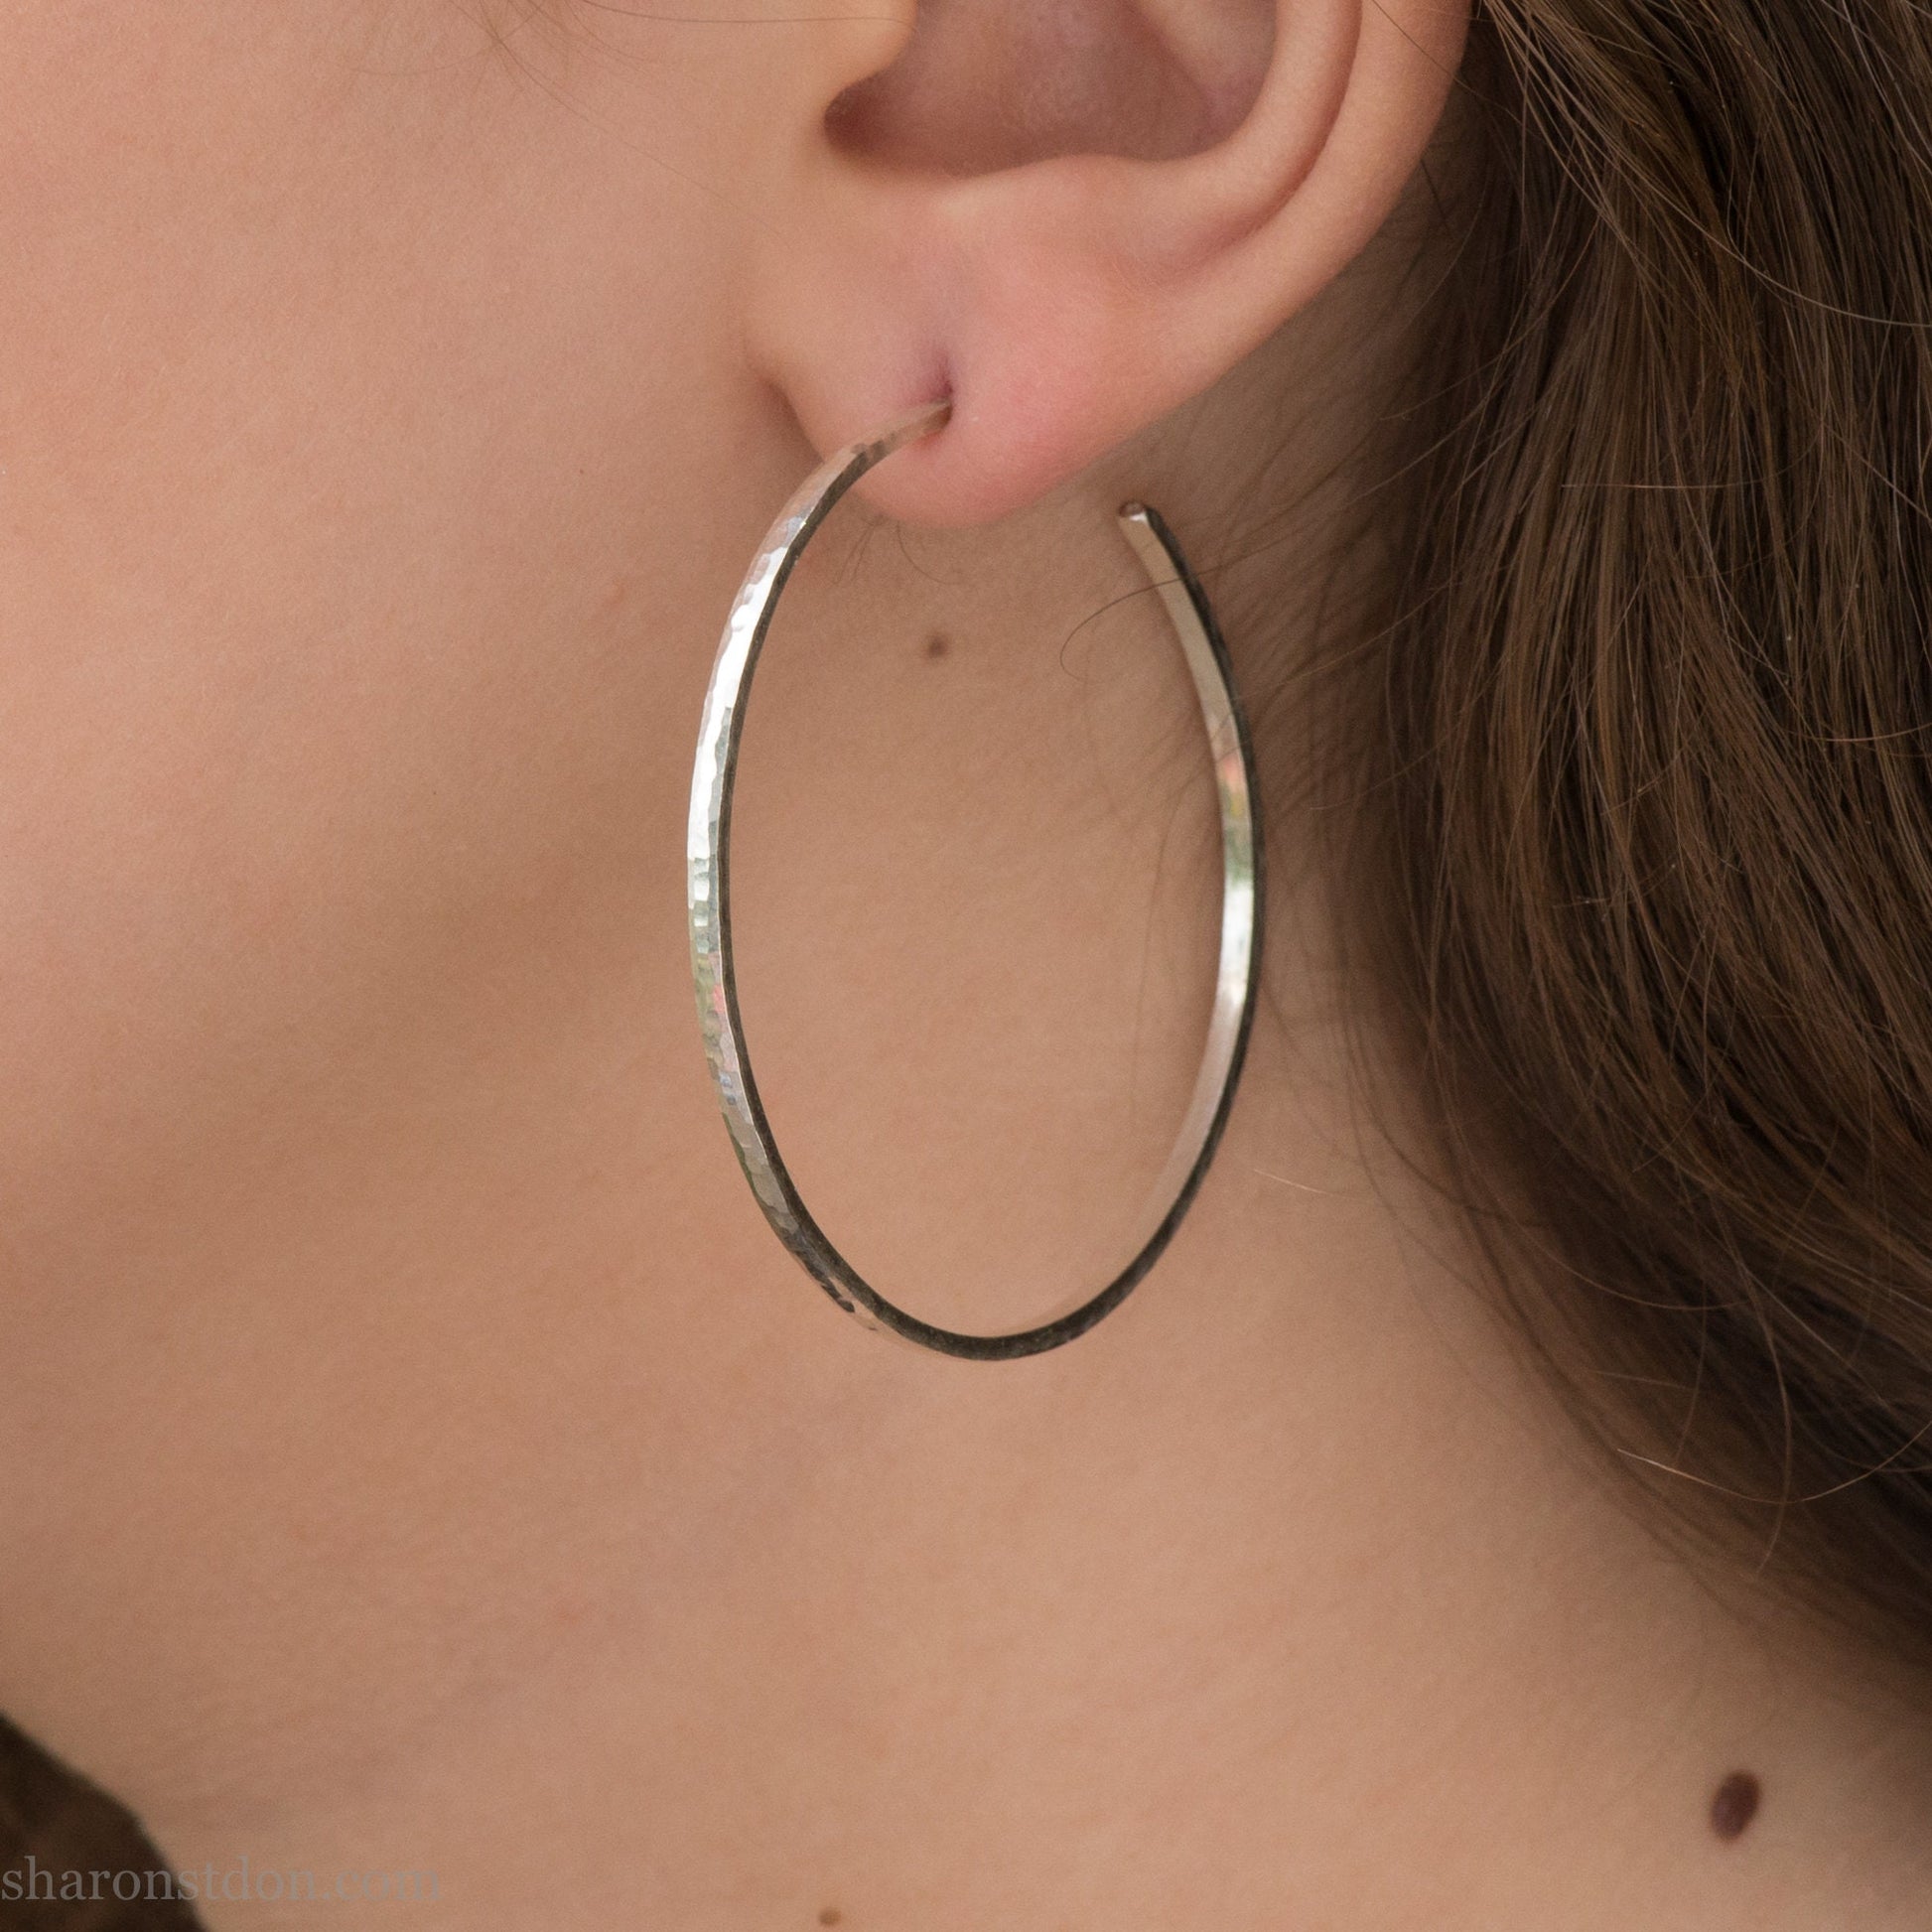 Handmade 925 sterling silver hoop earrings. Comfortable, lightweight, daily wear earrings made by Sharon SaintDon in North America. 50mm diameter.